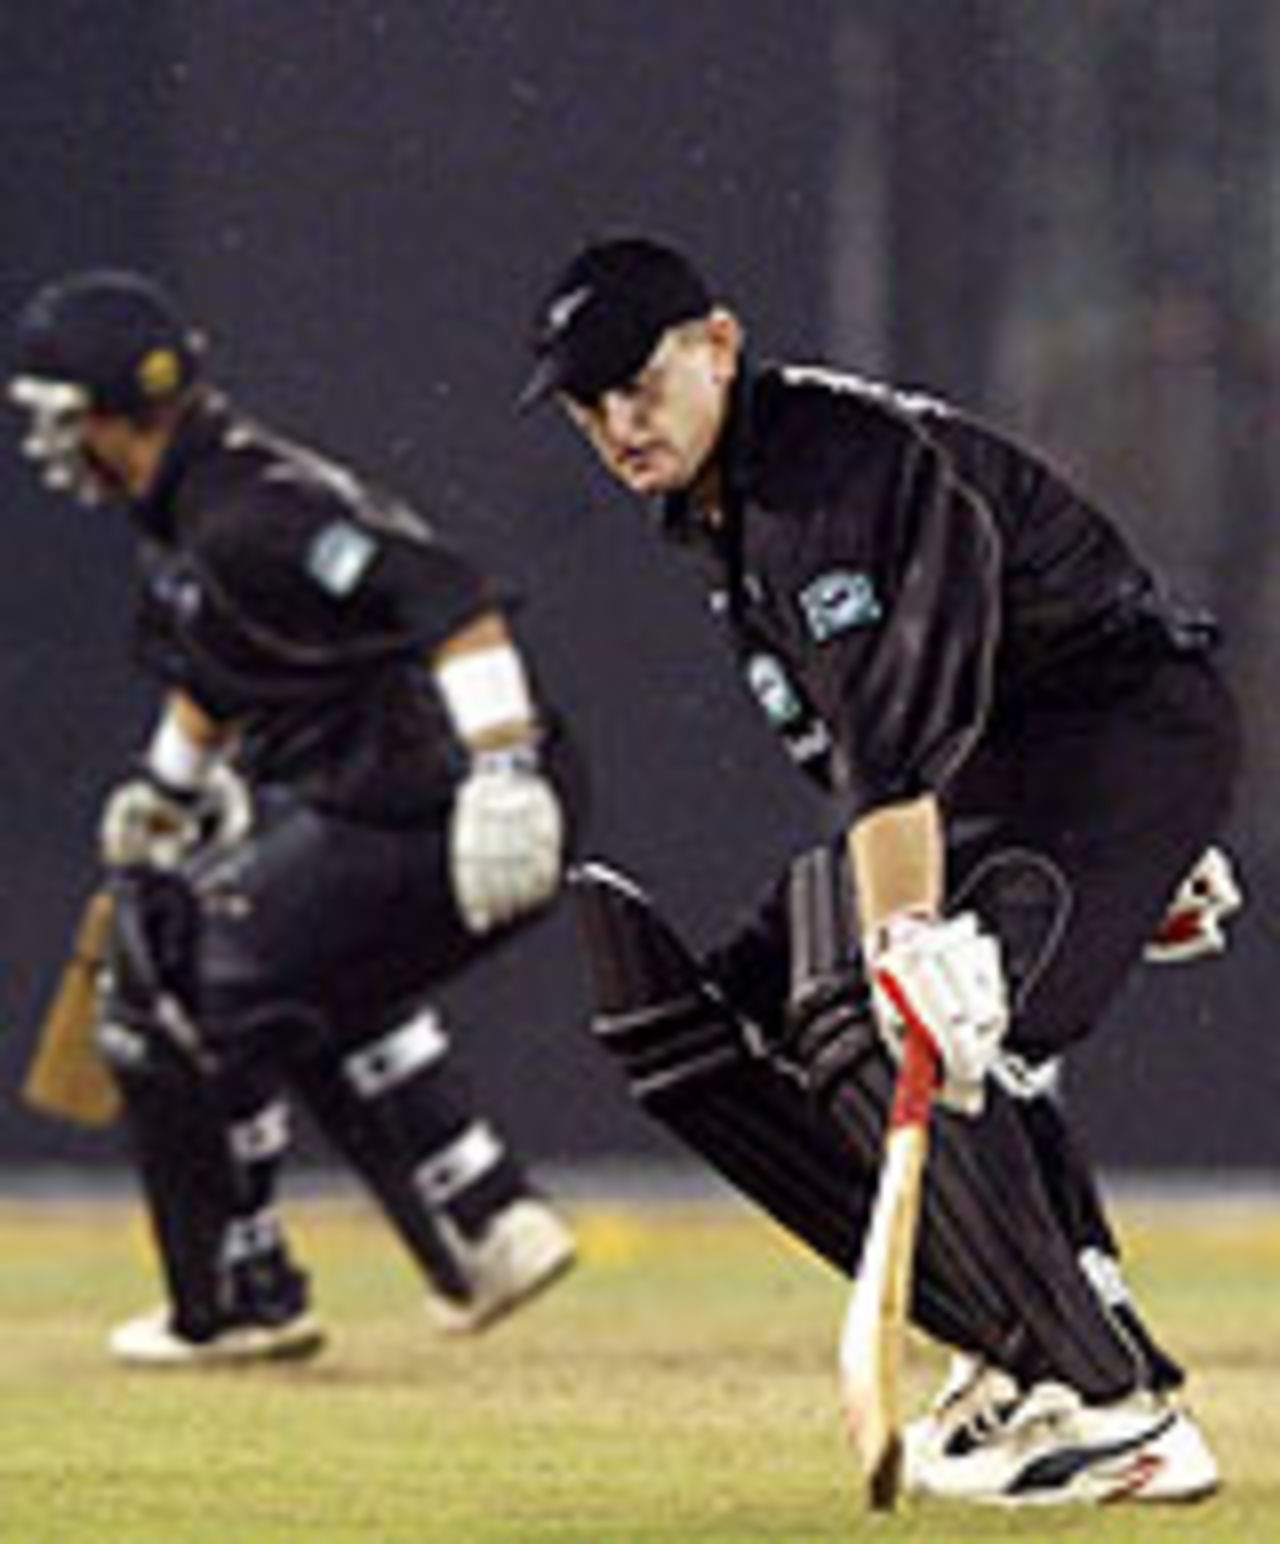 Scott Styris and Craig McMillan complete a run, India v New Zealand, Match 6, TVS Cup, November 6, 2003